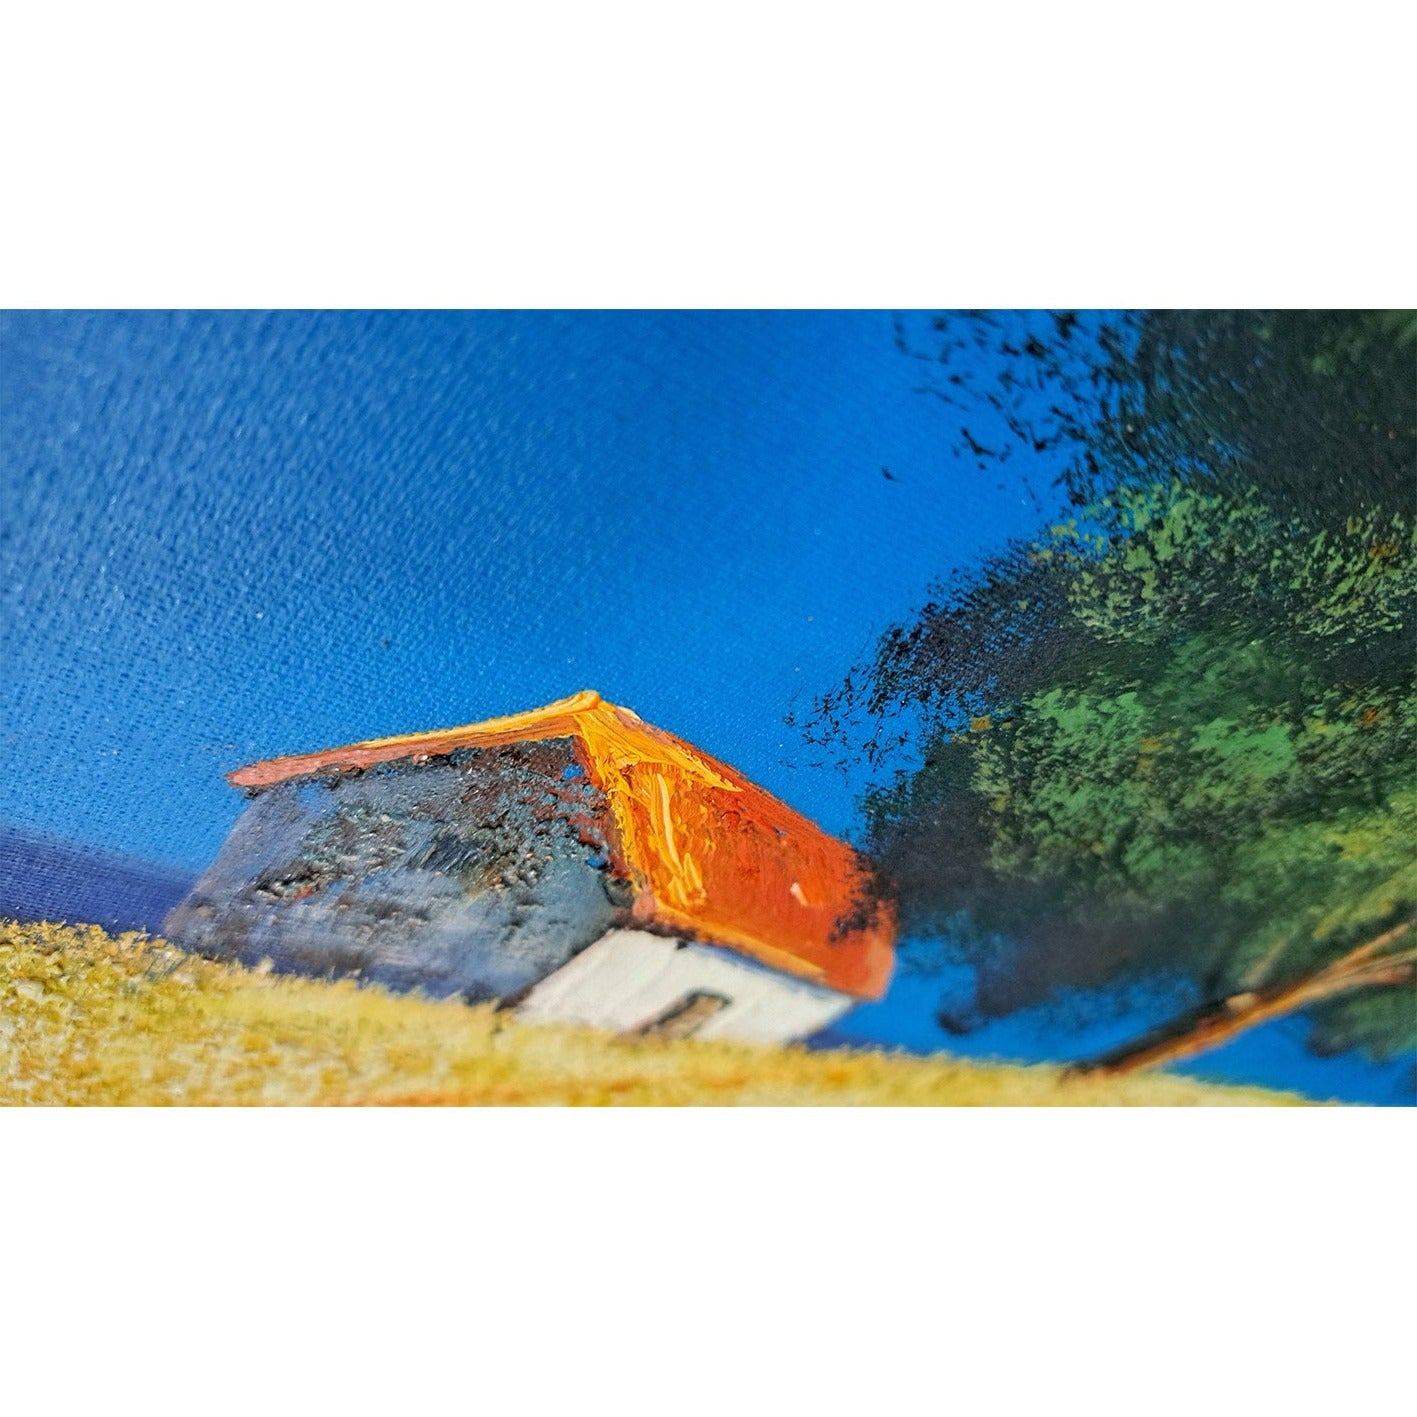 Tree House Painting 60x50 cm